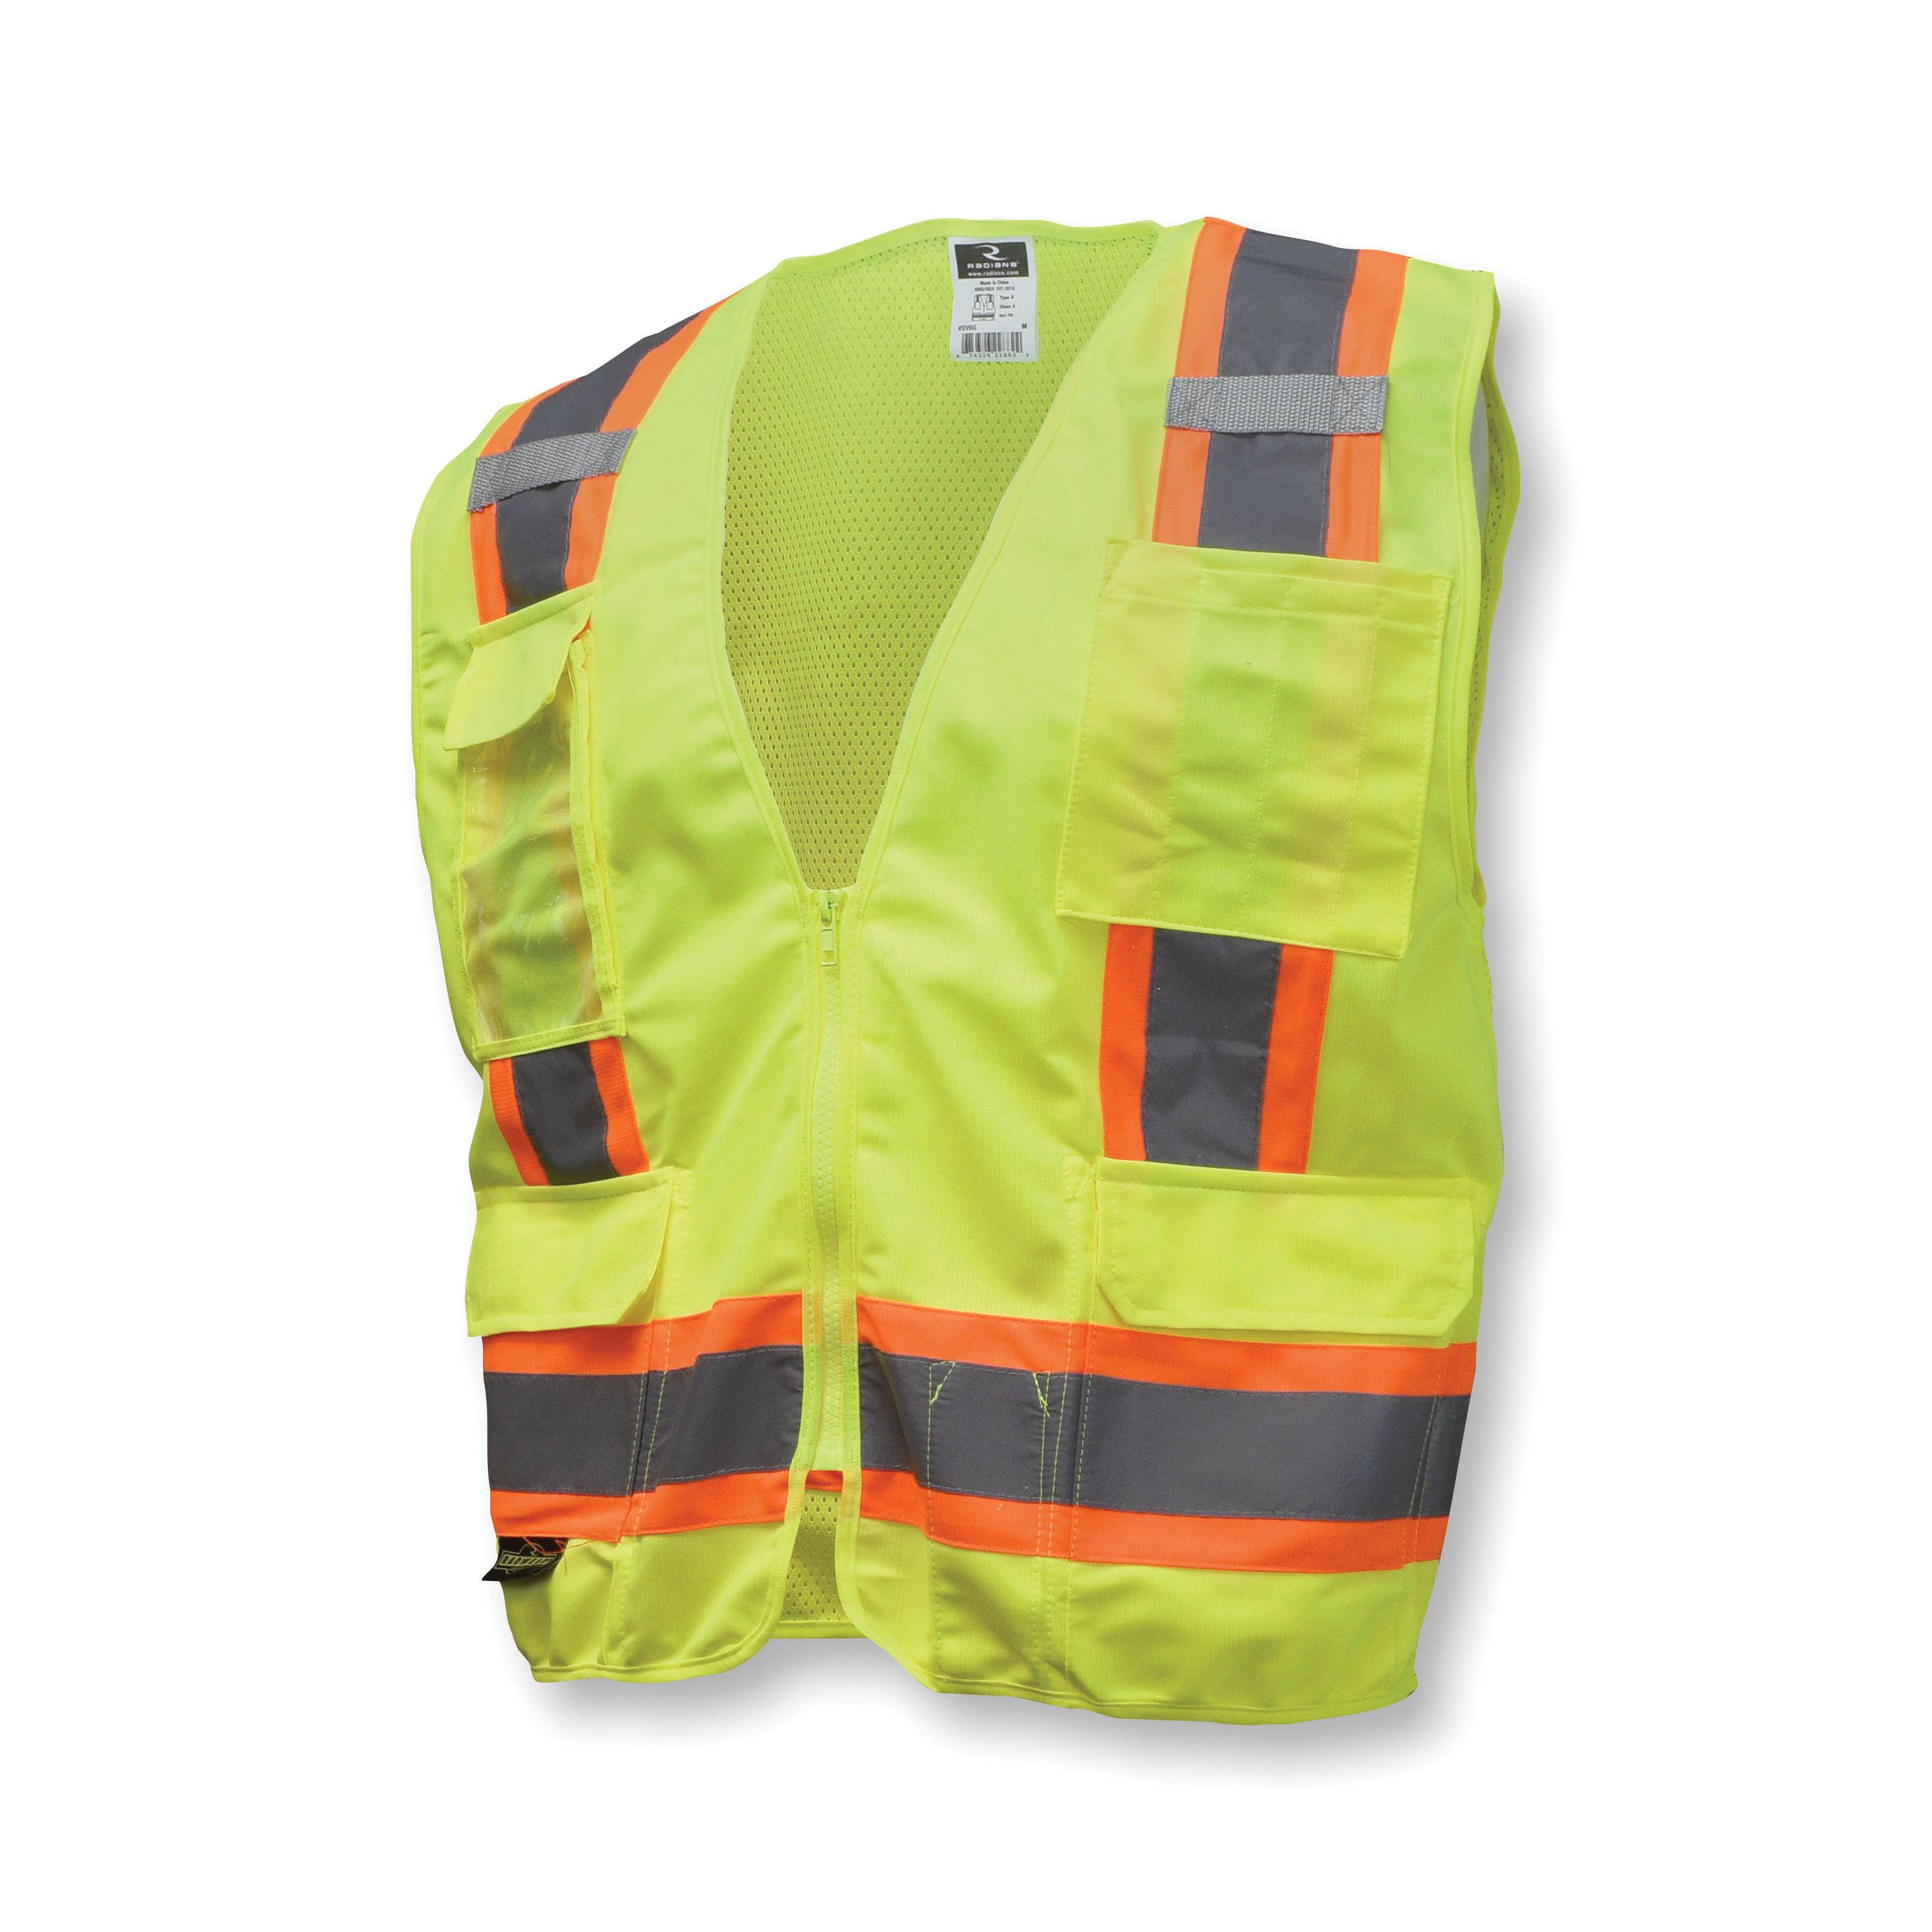 ANSI/ ISEA 107-2015 Radians 2 Pockets Green Mesh High Visibility Safety Vest 